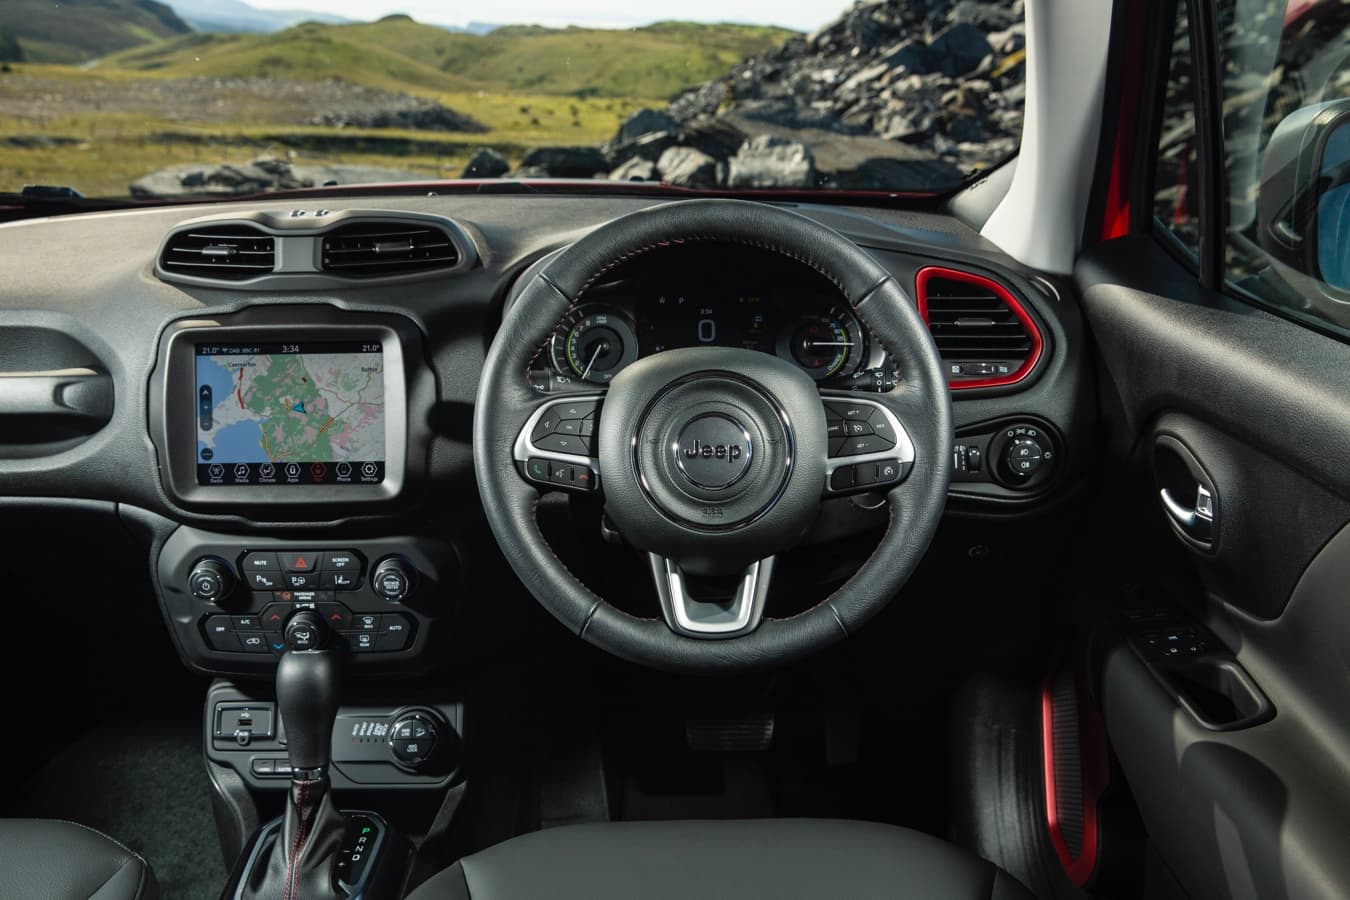 Interior Image of Jeep Compass